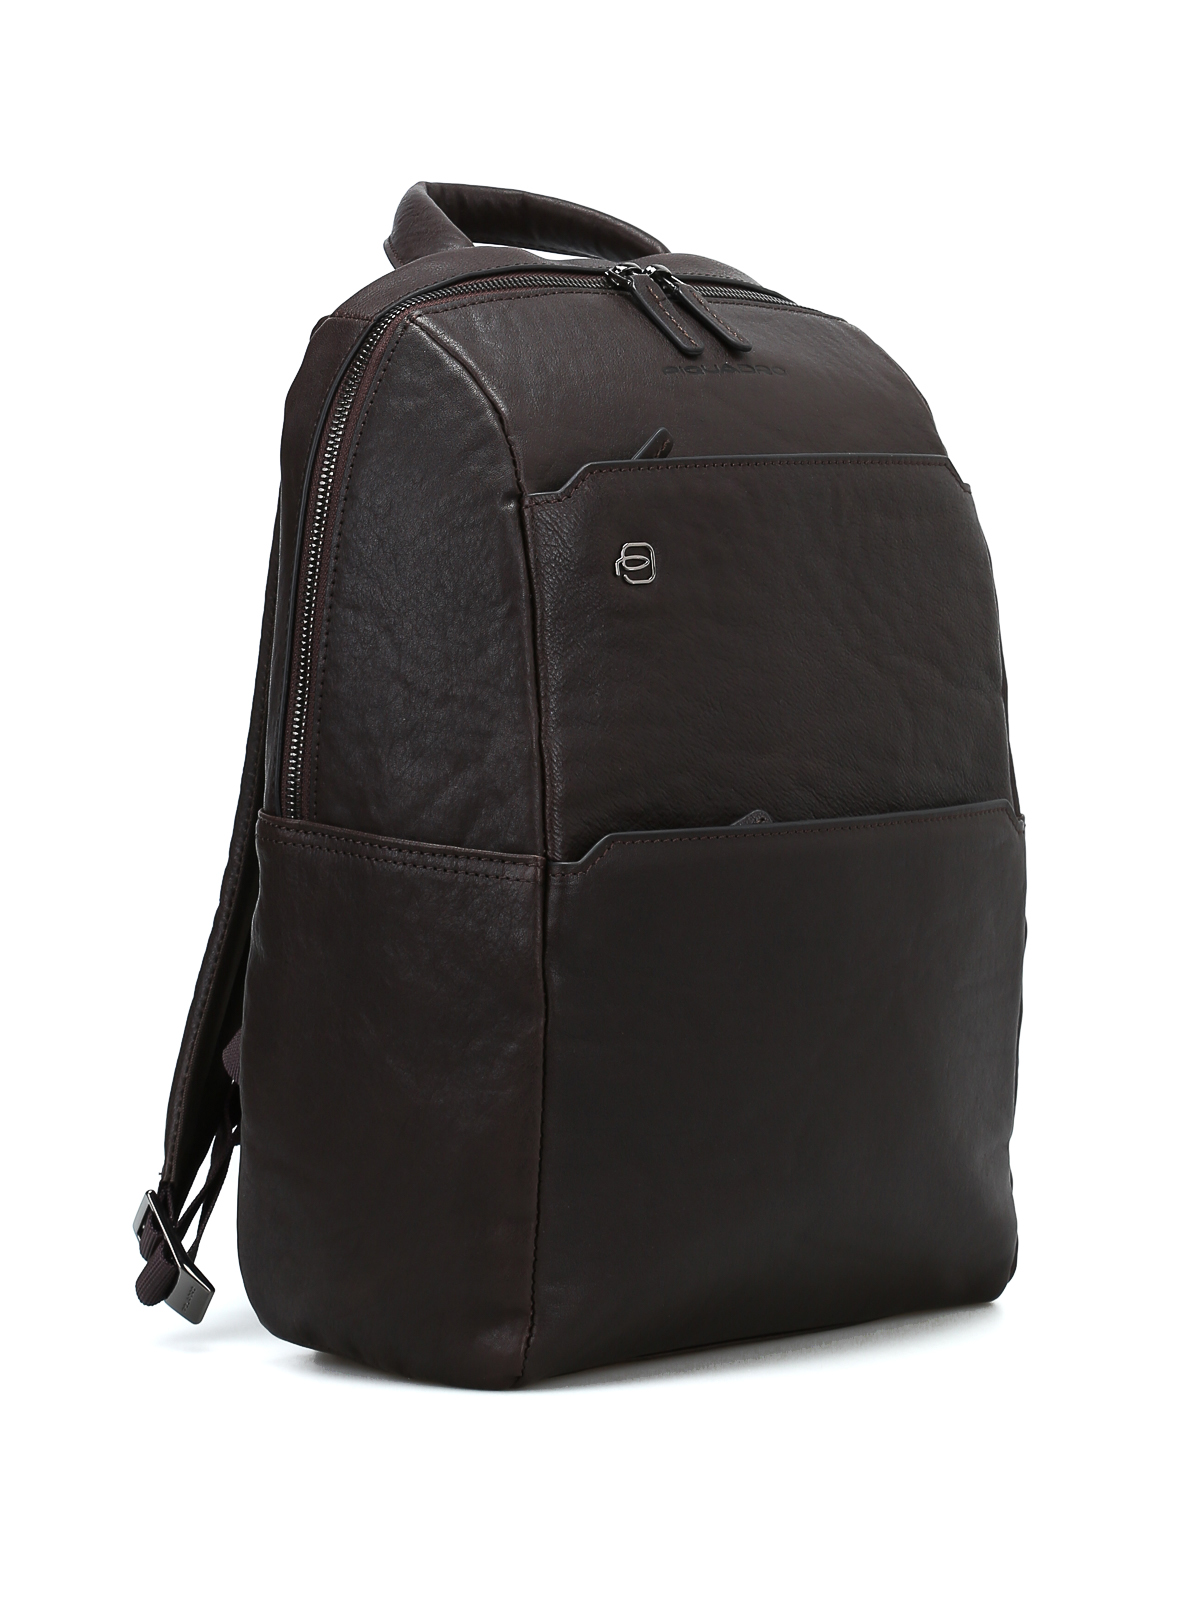 Backpacks Piquadro - Dark brown leather backpack - CA4022B3TM